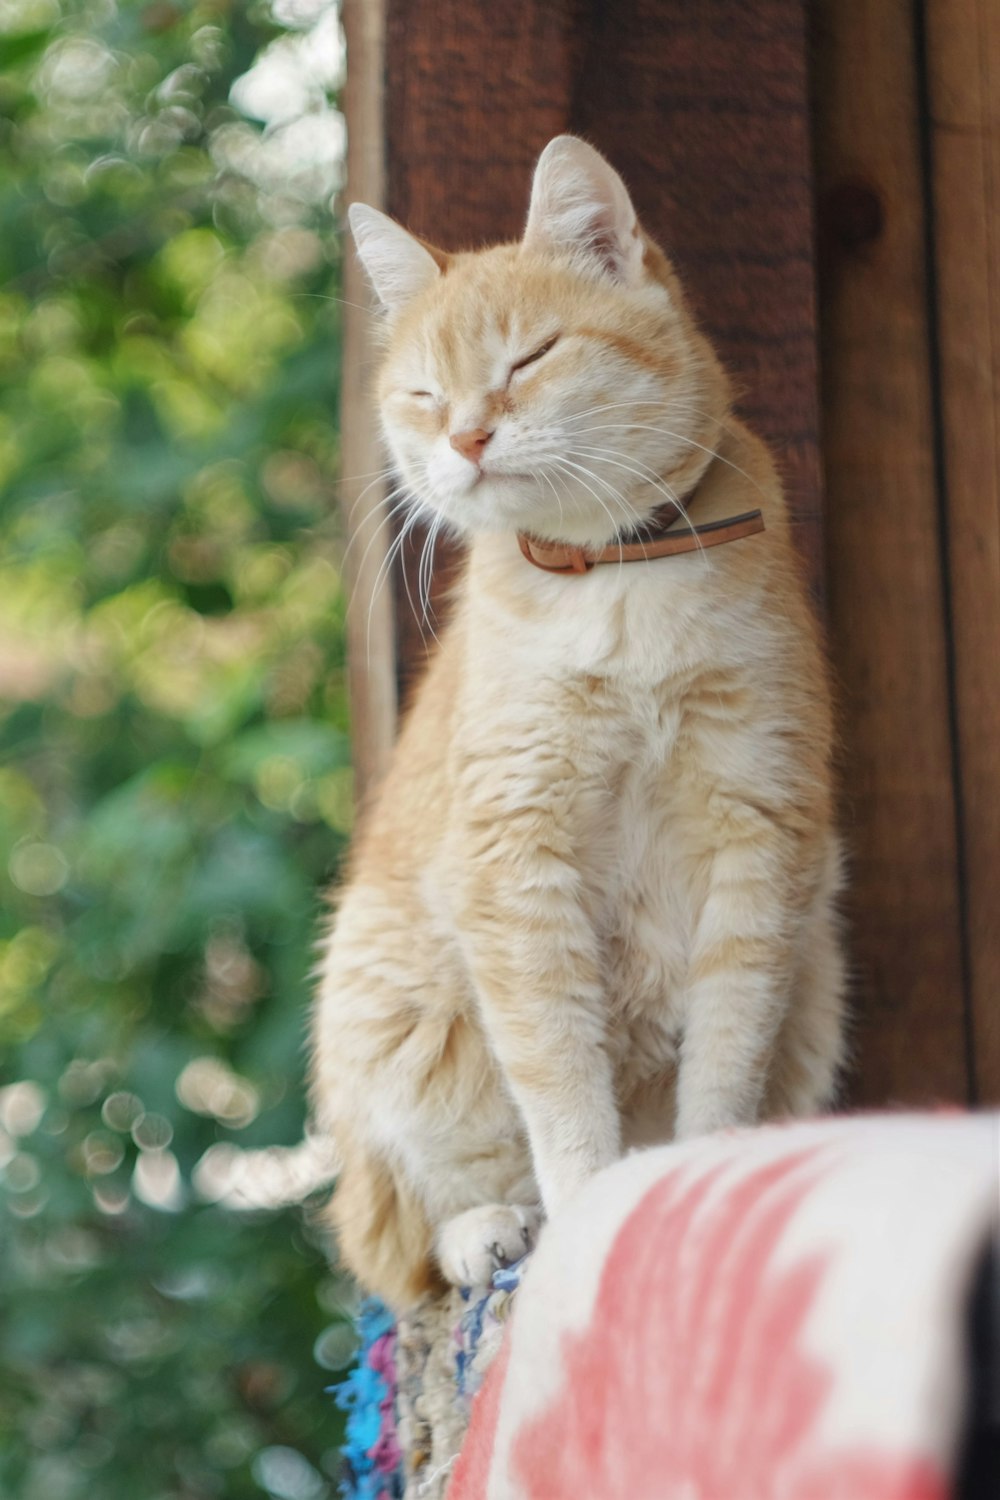 orange tabby cat on white textile